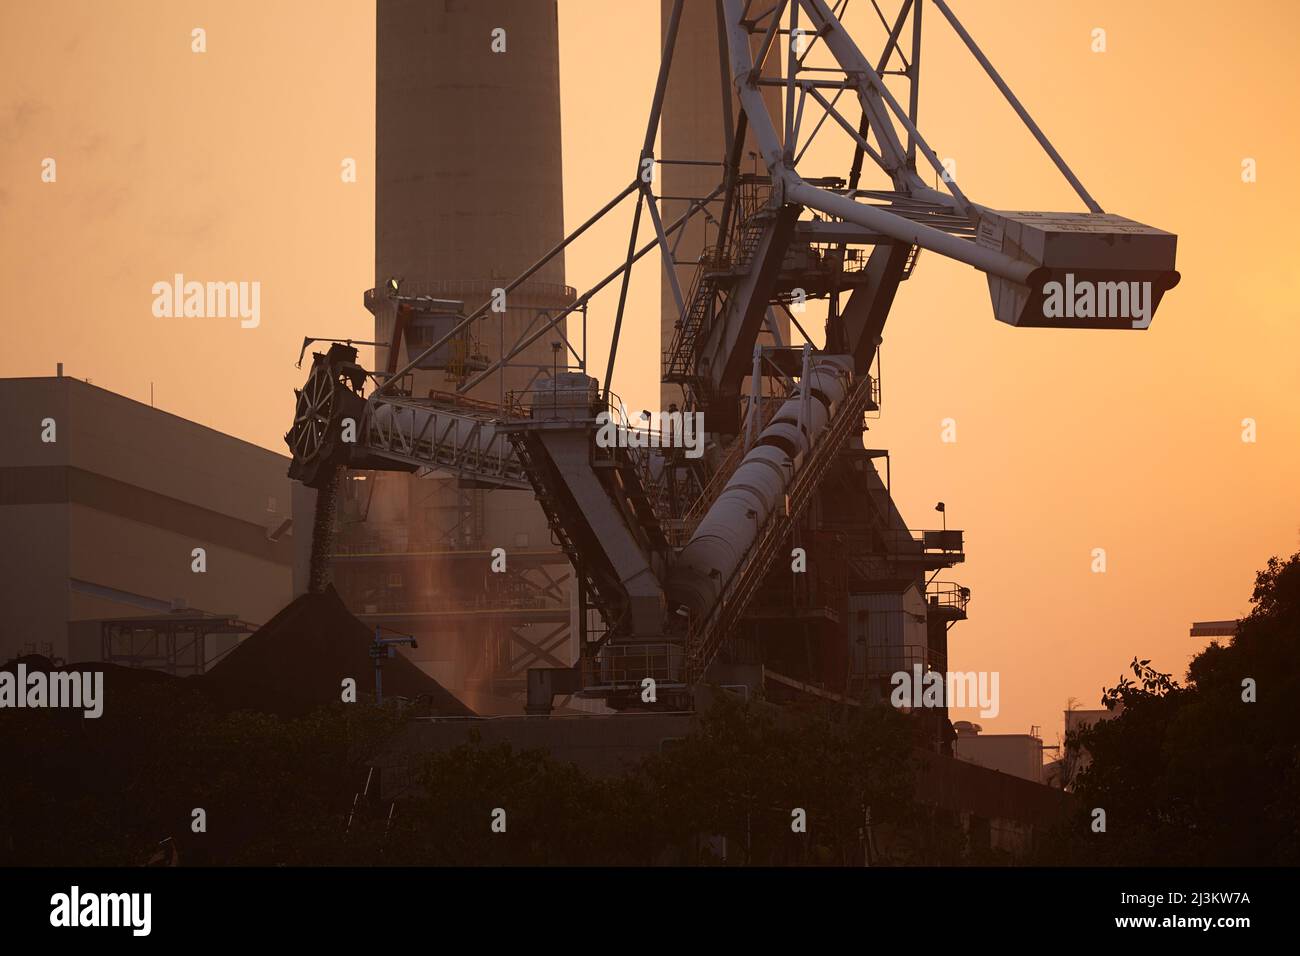 Eine Silhouette eines Kohlekraftwerks bei Sonnenuntergang, Lamma Island, Hongkong.; Yung Shue Wan, Lamma Island, Hongkong, China. Stockfoto